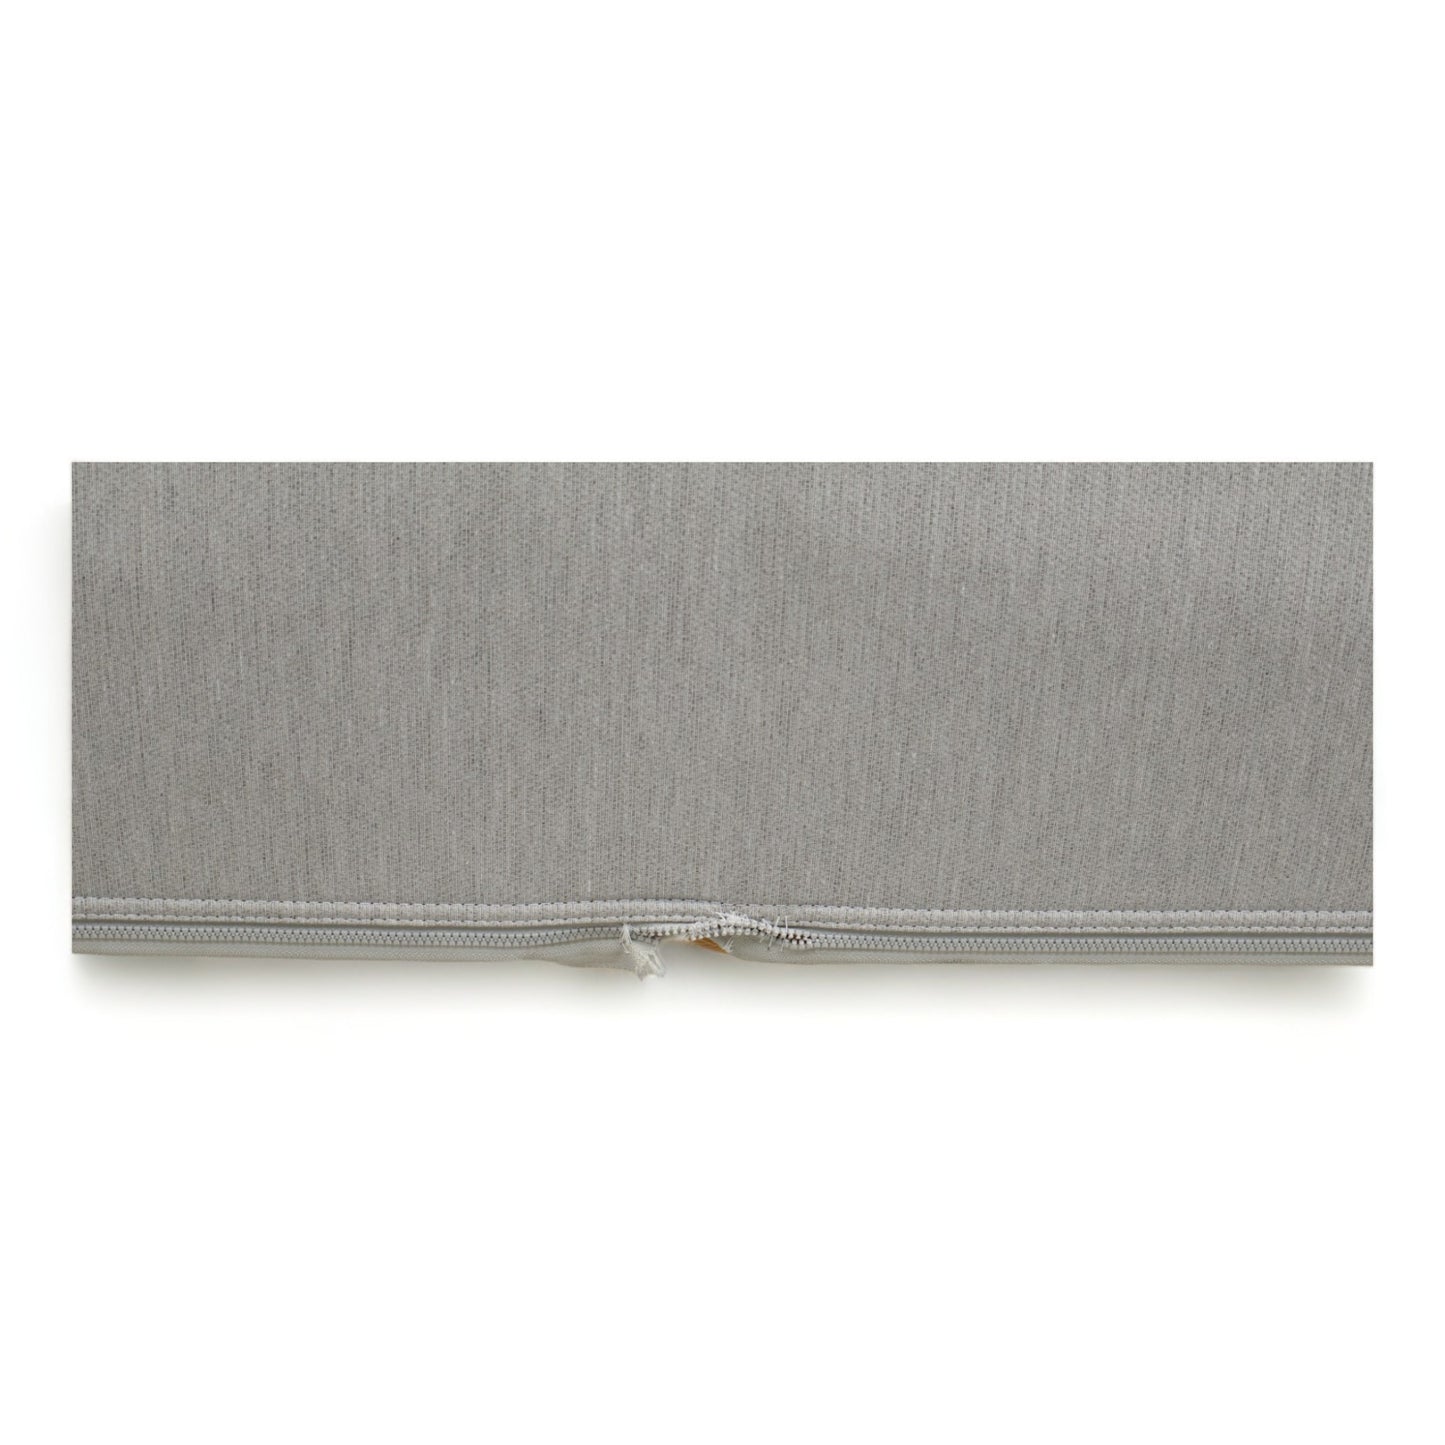 Nyrenset | Lys grå Ekornes Svane 150x200 seng